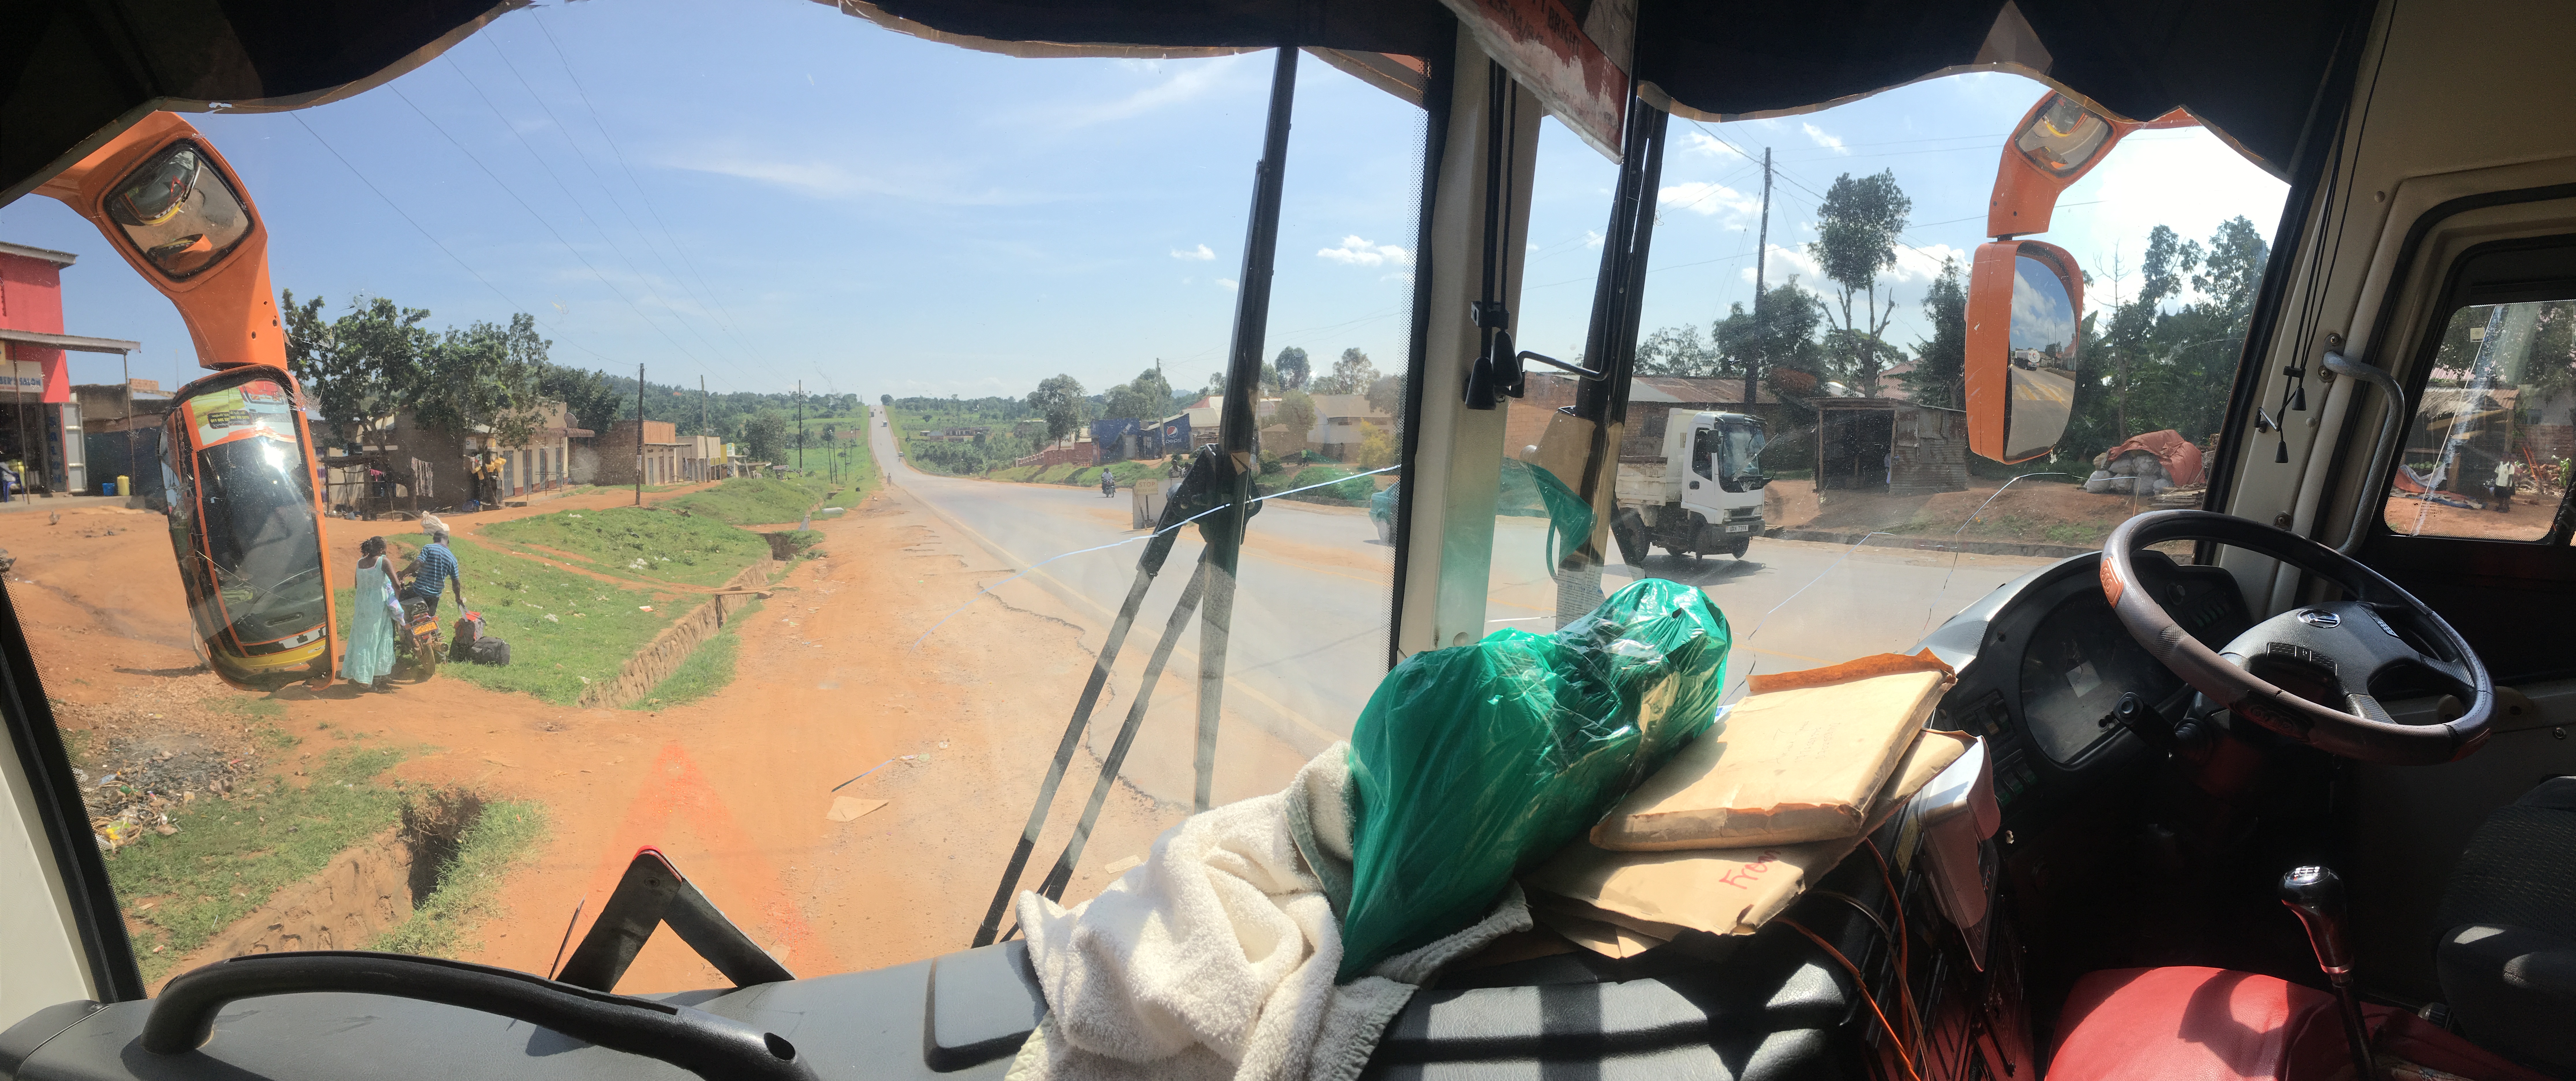 A bus ride to Northern Uganda